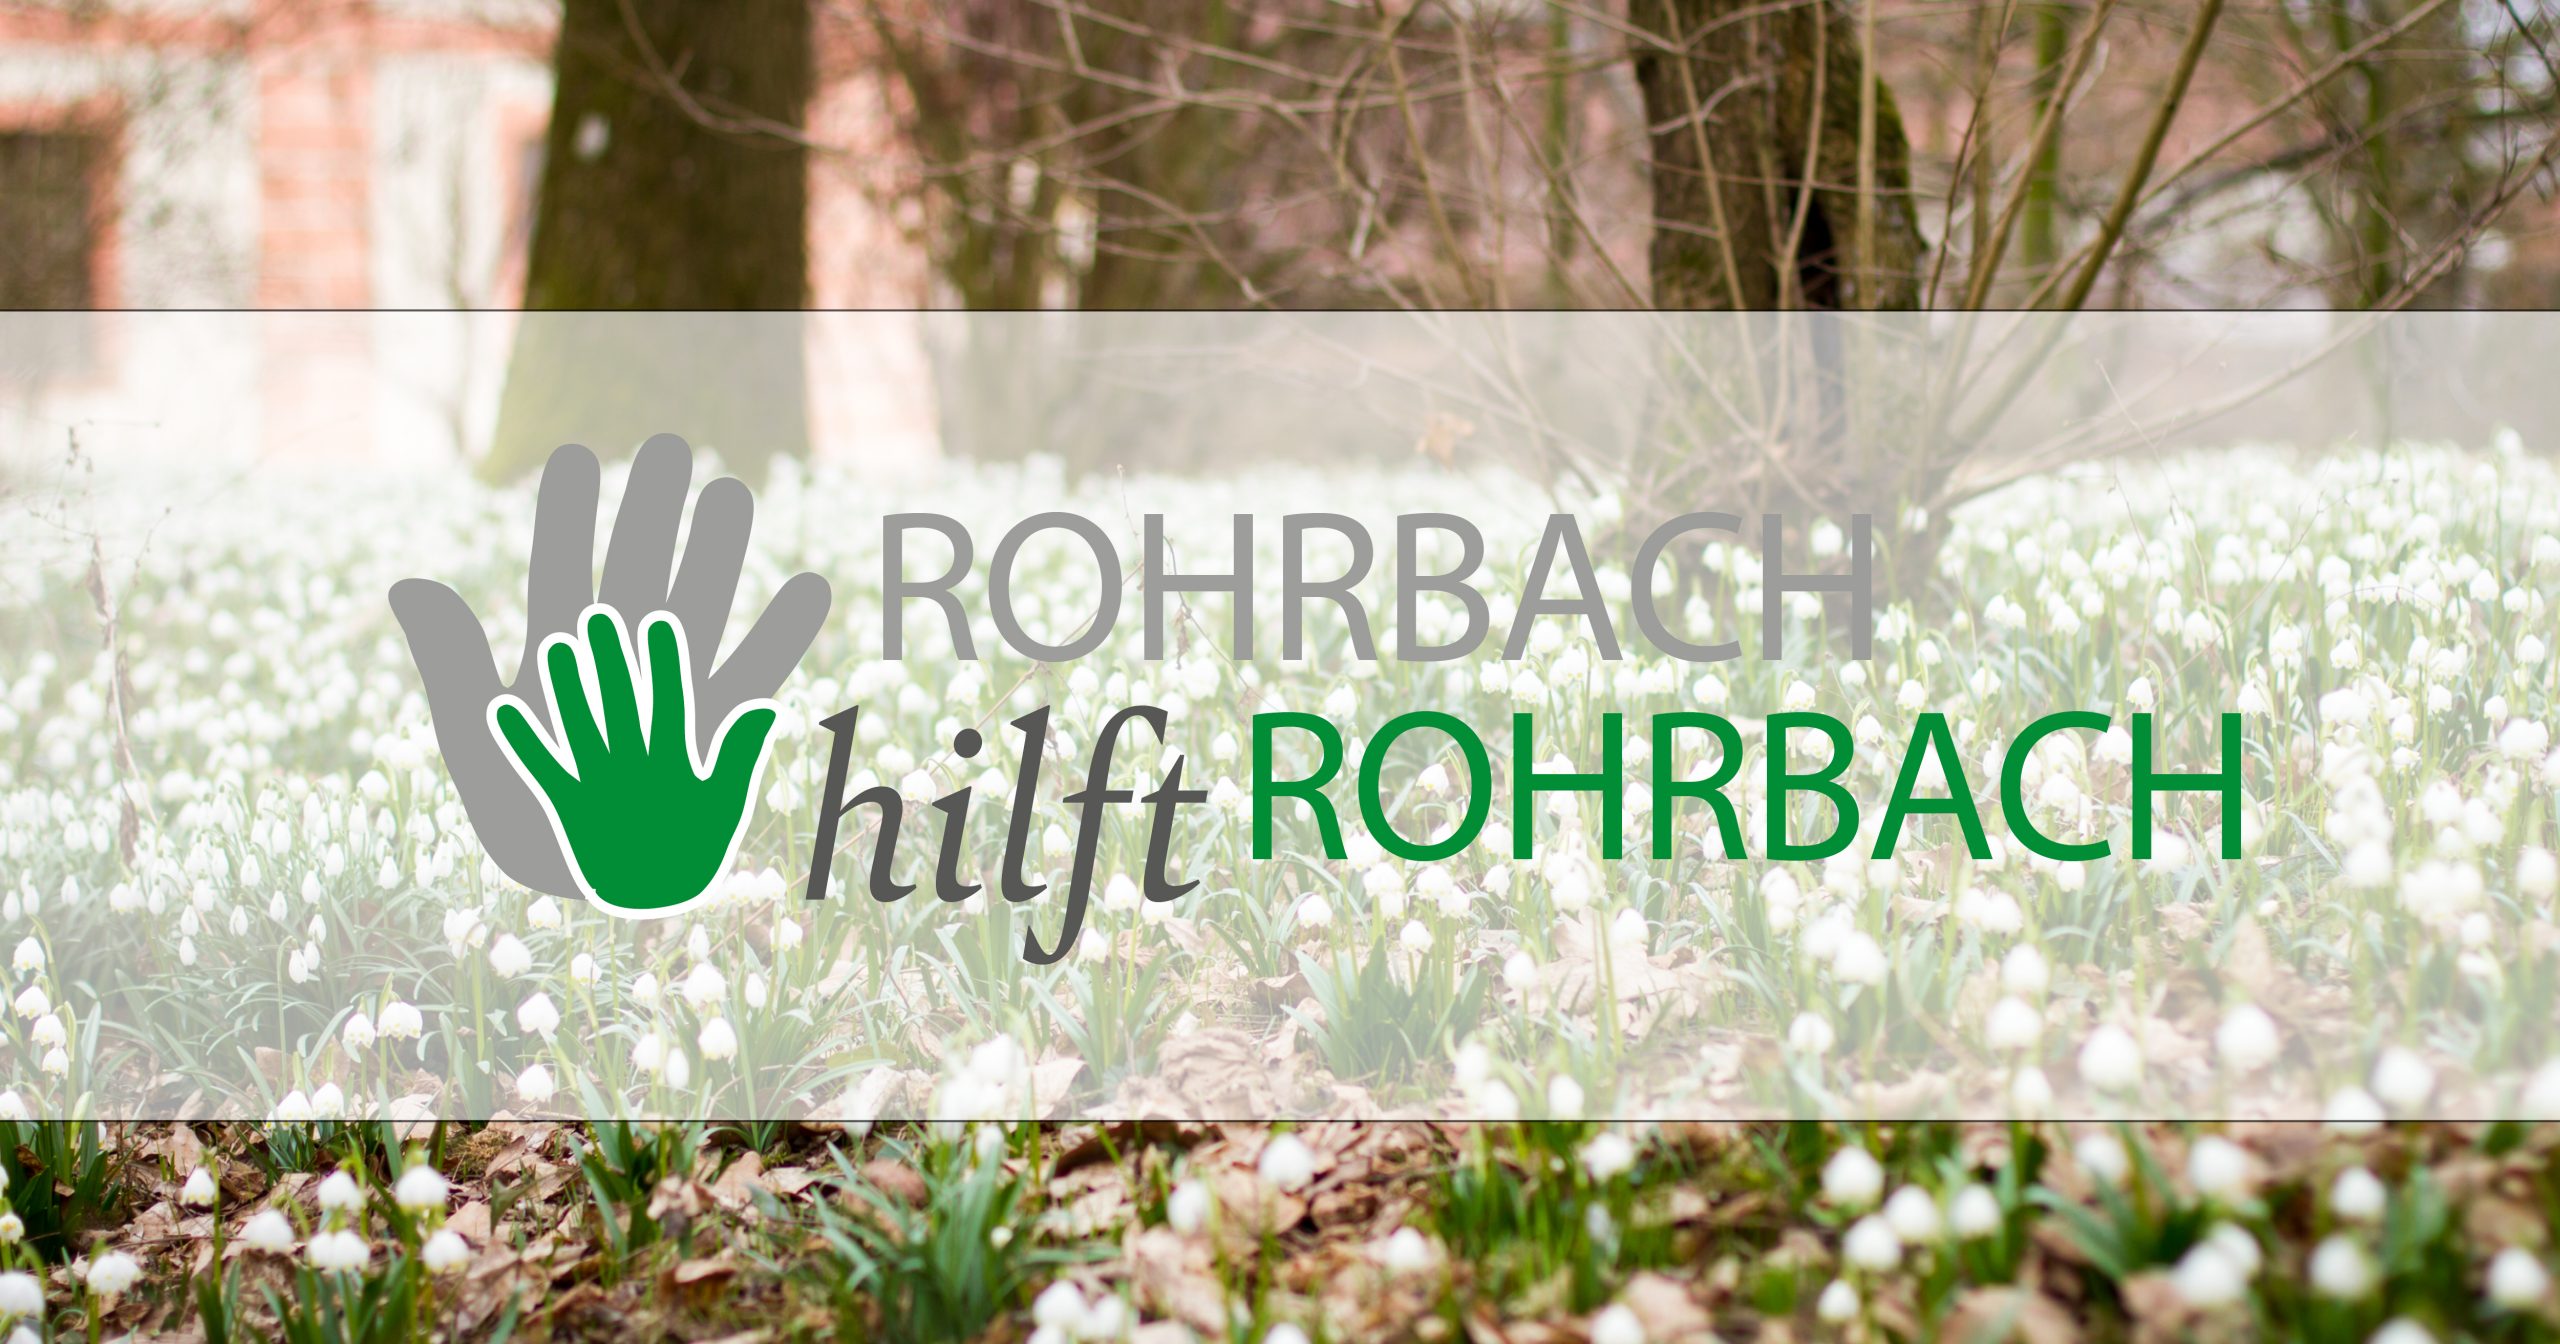 (c) Rohrbach-hilft-rohrbach.de